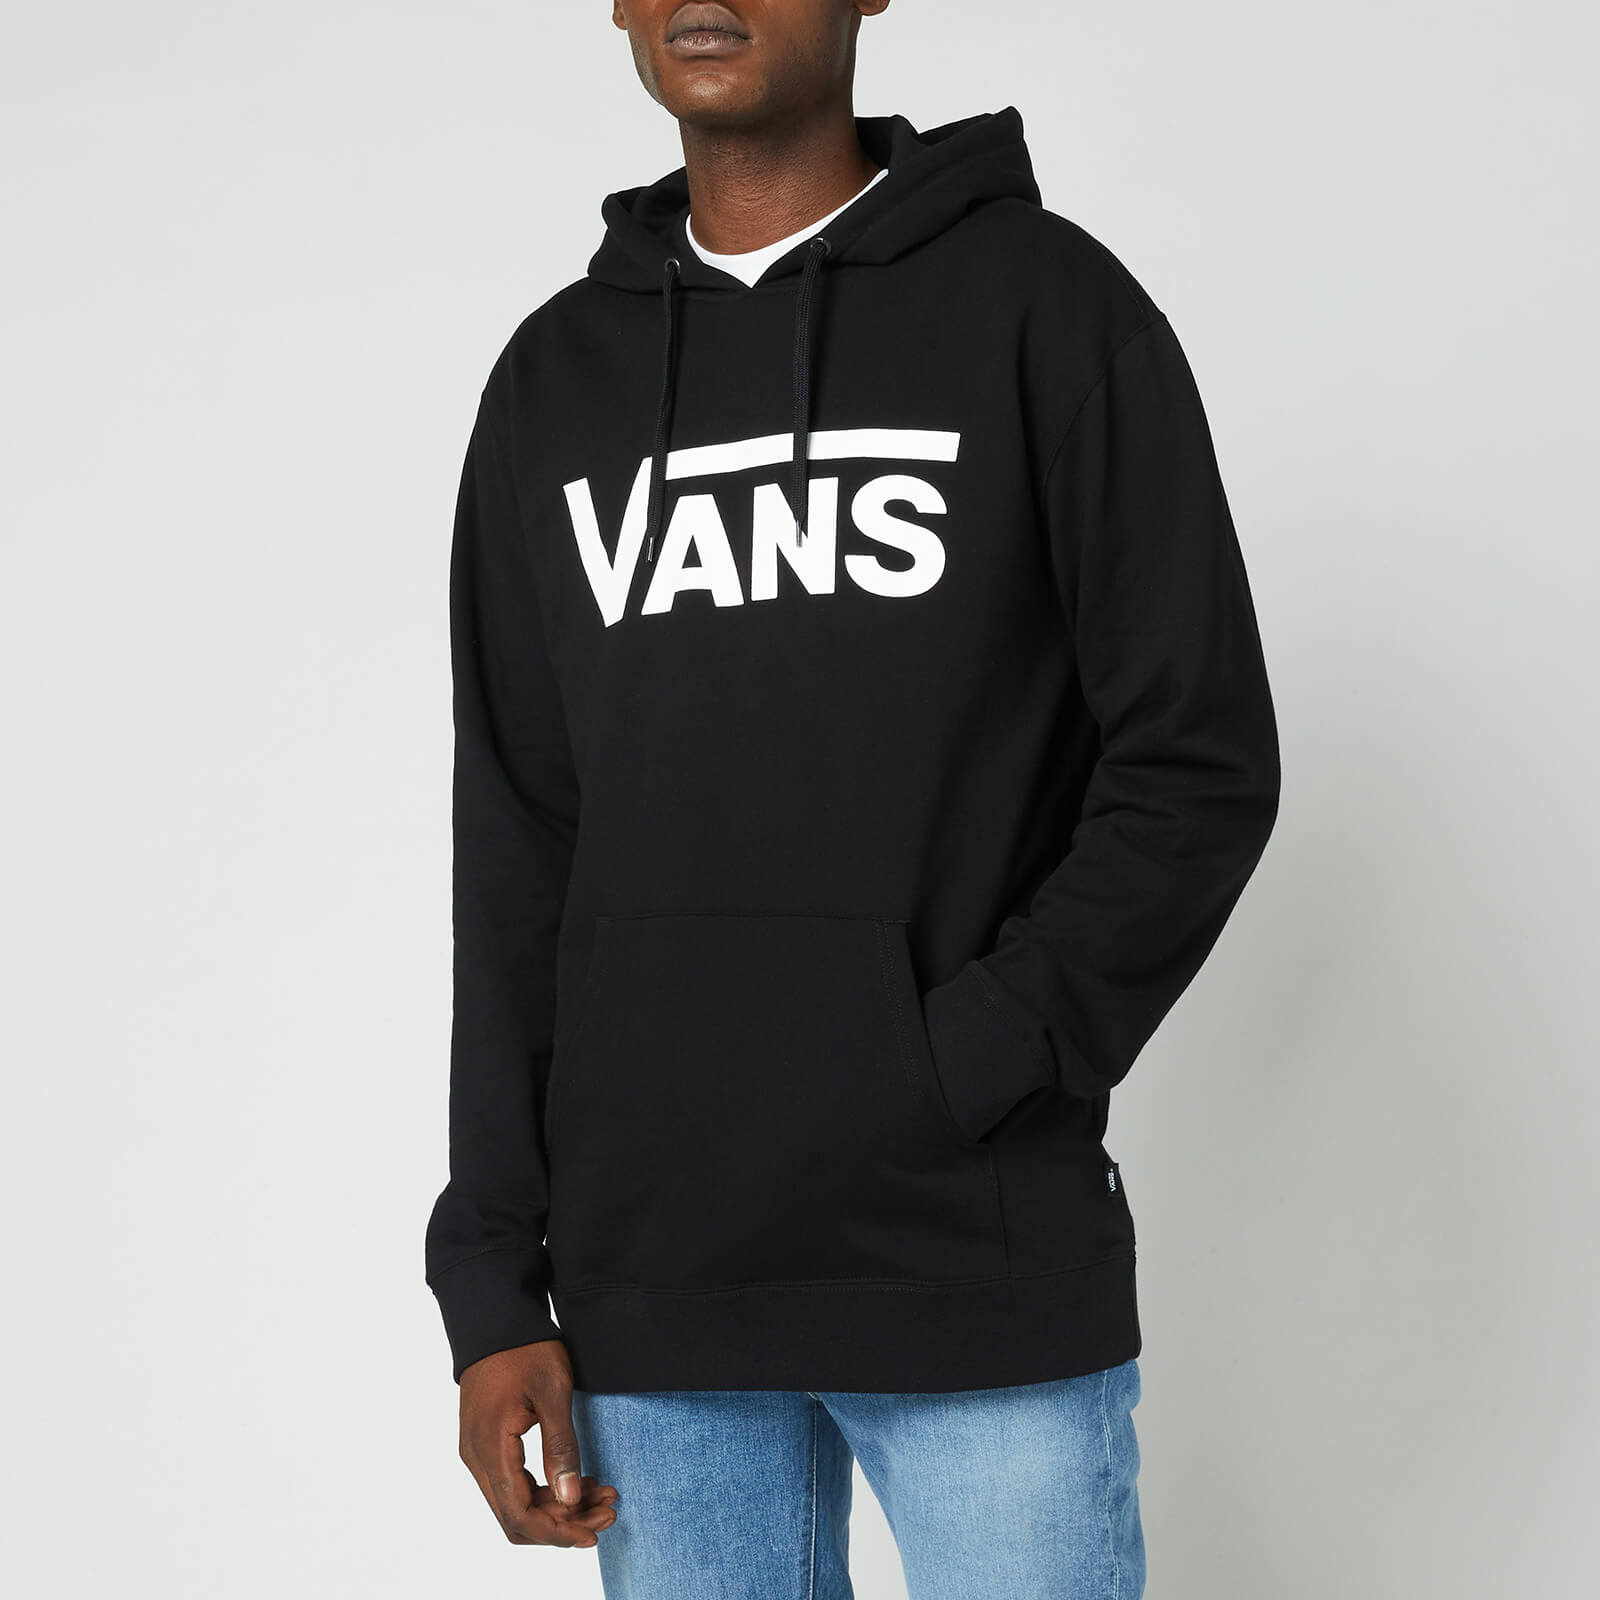 Vans Men's Classic Pullover Hoodie - Black/White